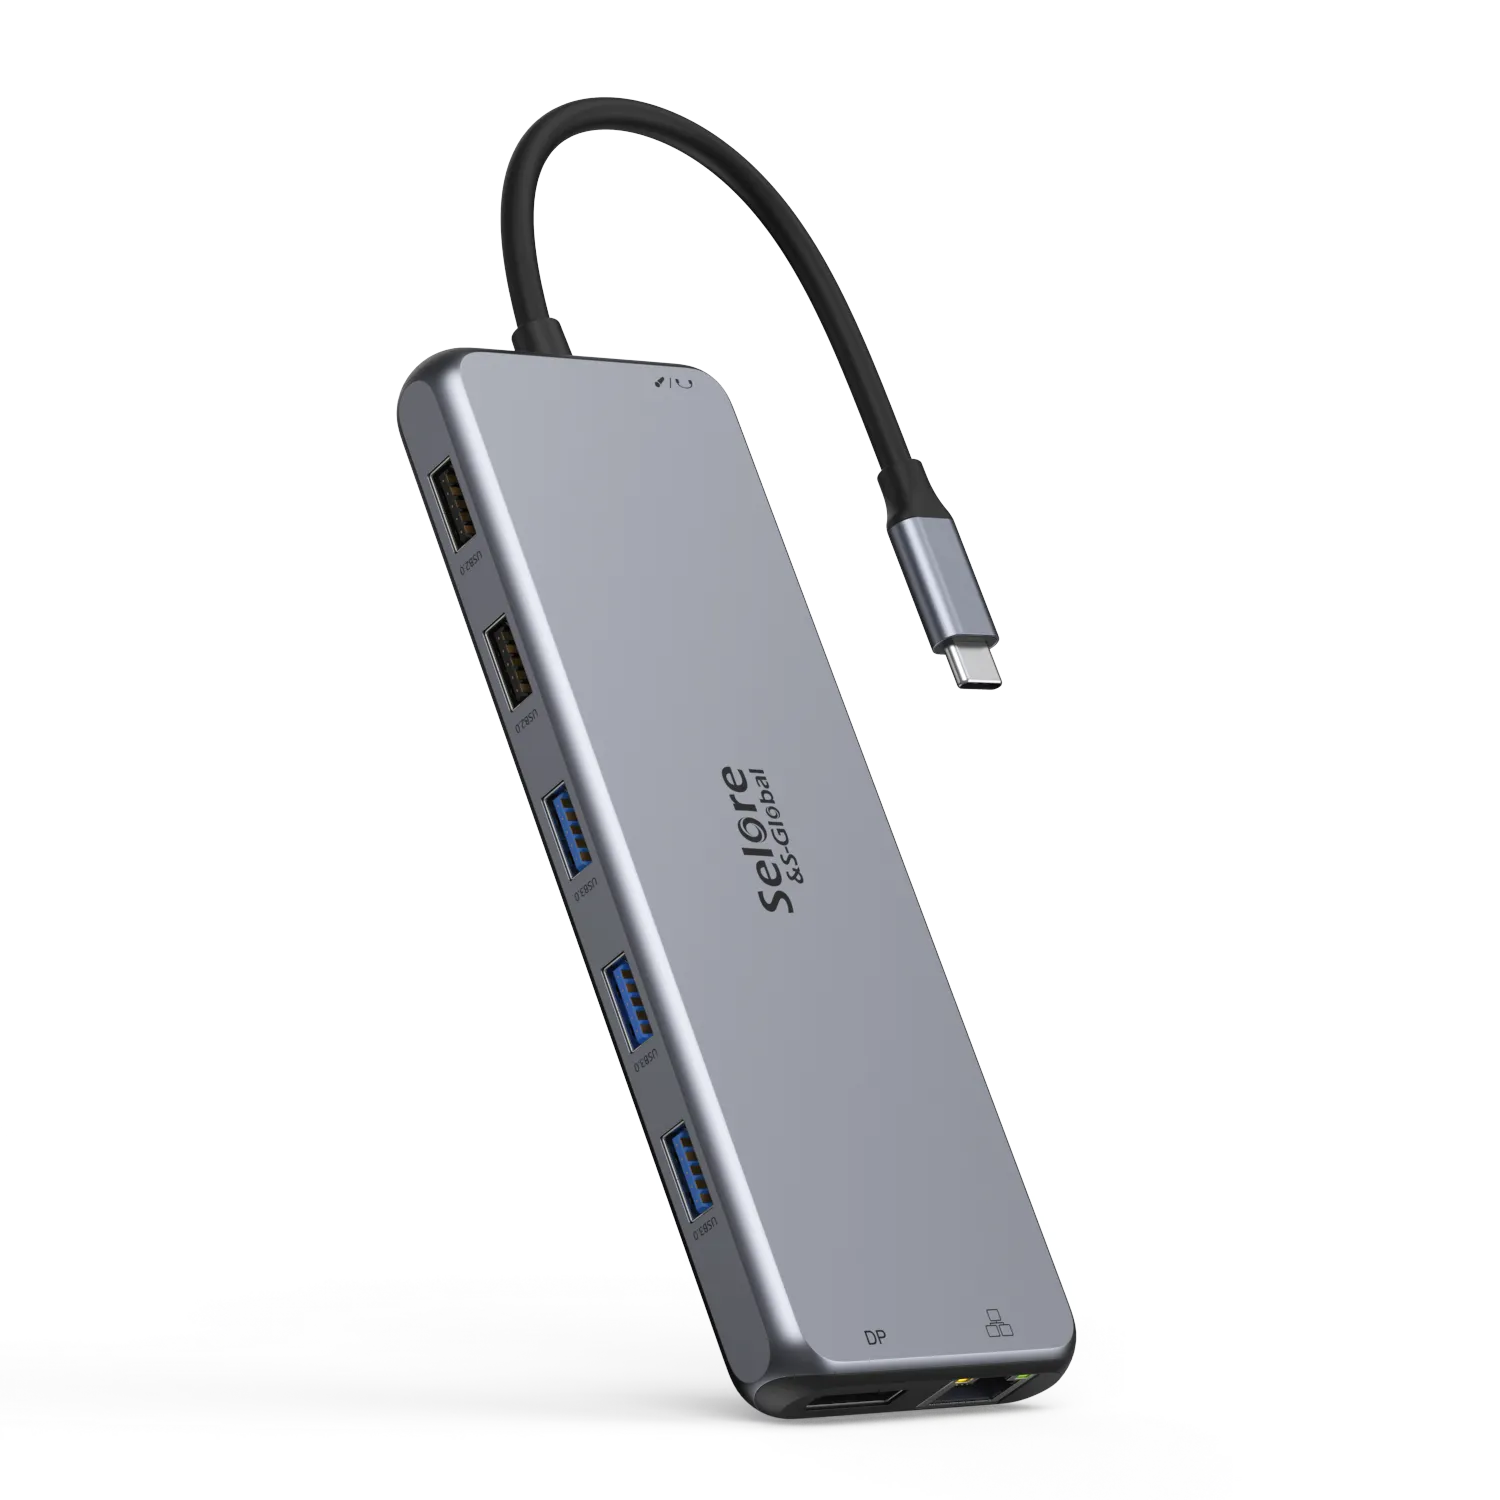 Chargeur USB C Multiple, Station Charge USB【1USB-C + 5USB-A】 Chargeur USB  65W, USB C Charge Rapide, 6 Ports Station de Charge Compatible avec